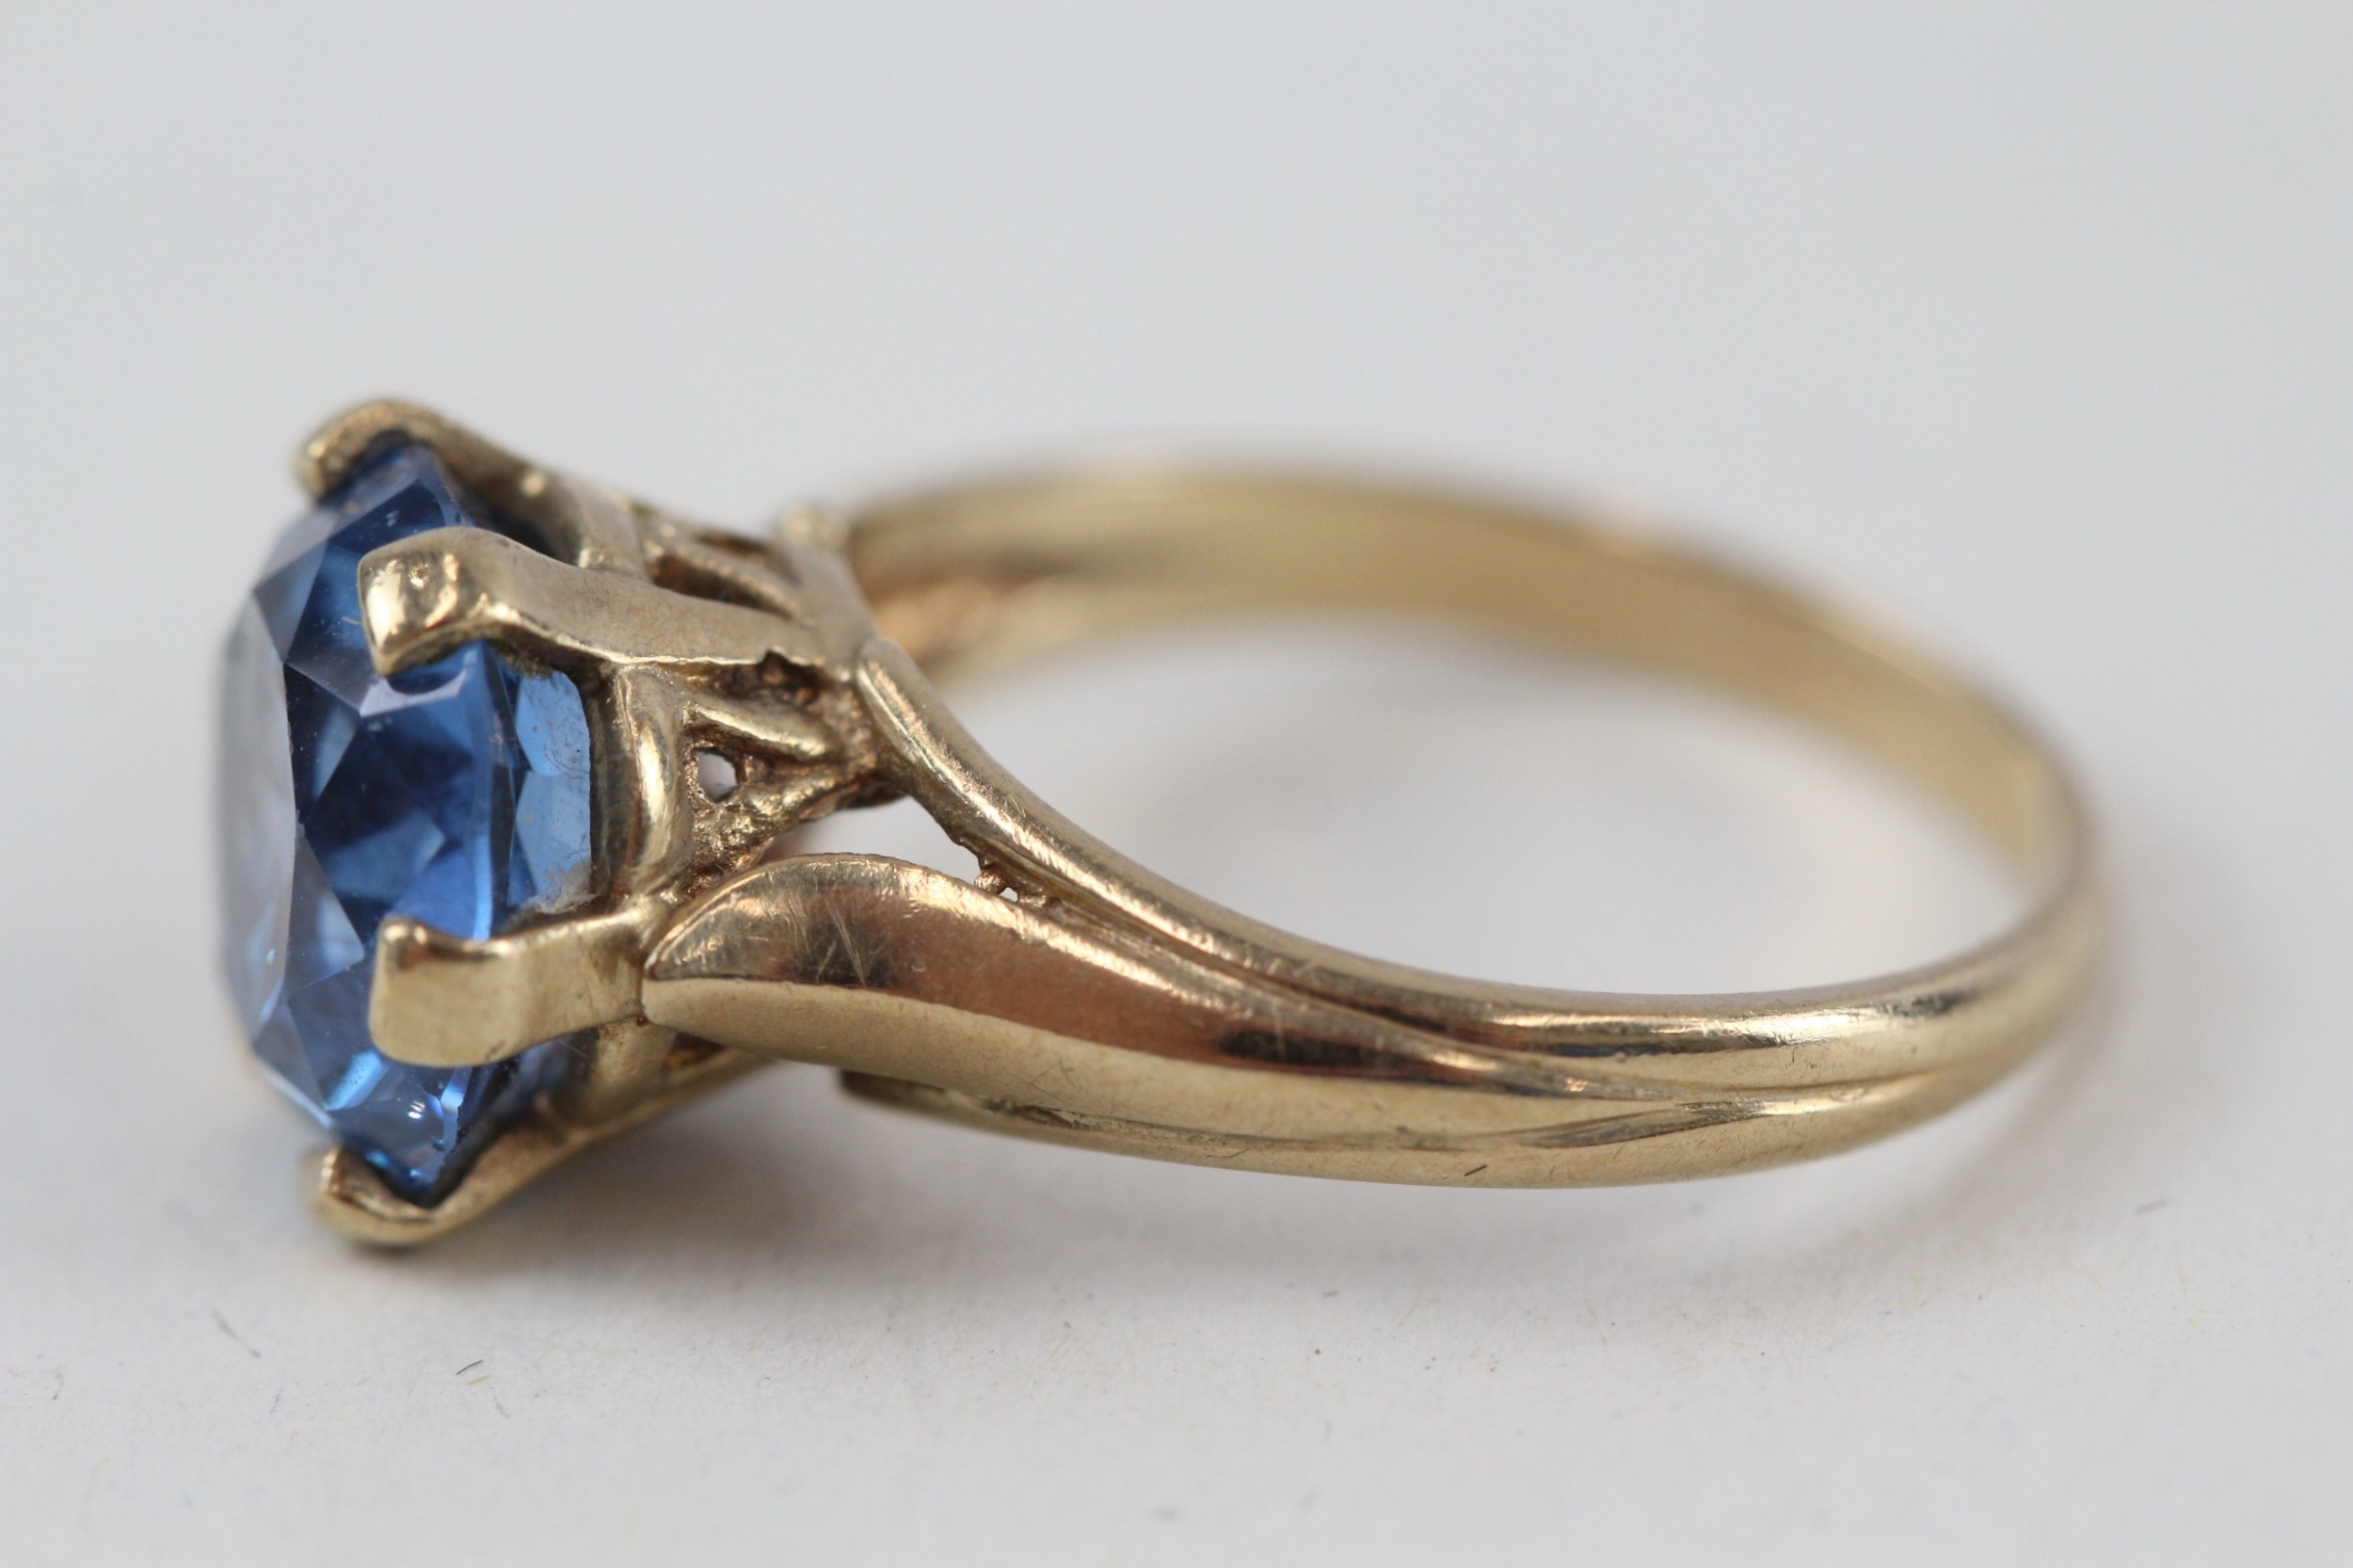 9ct gold blue gemstone dress ring, claw set (3.3g) - Image 3 of 4